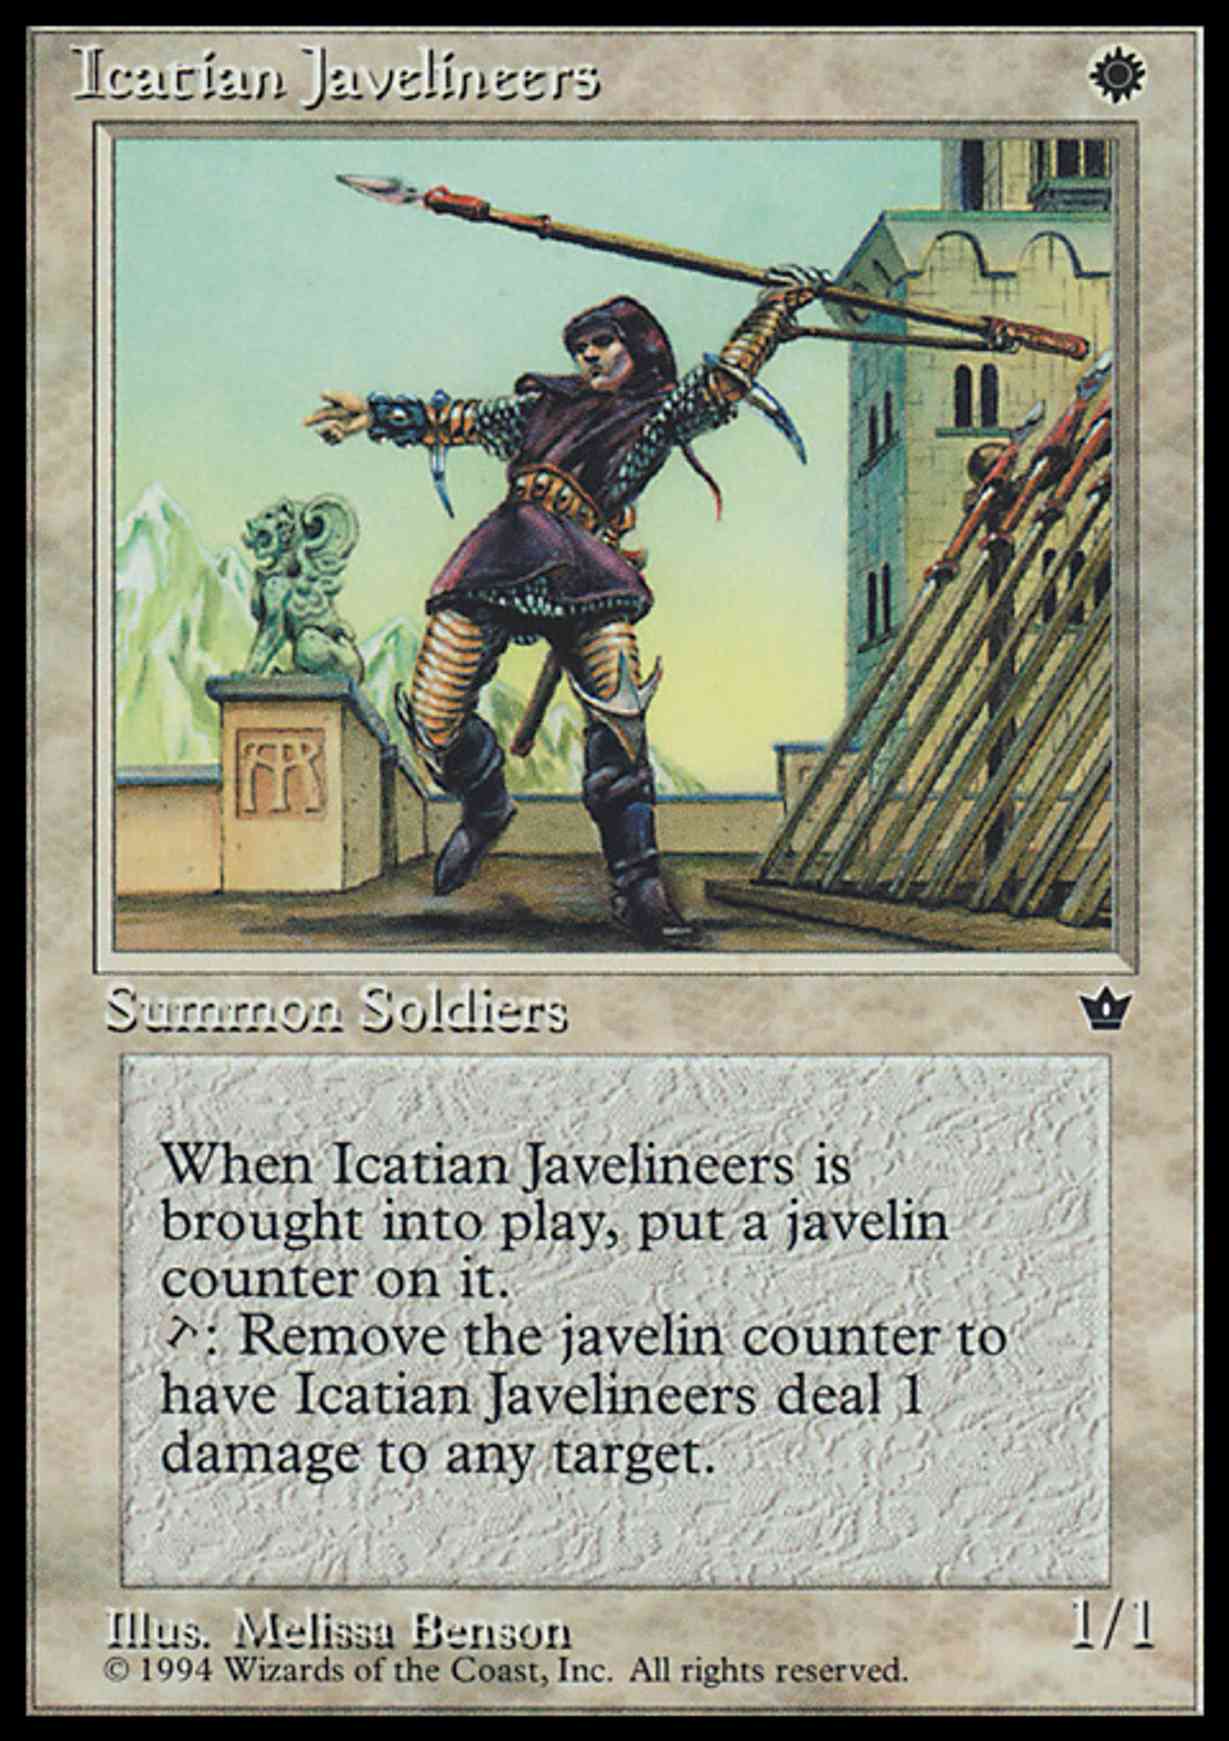 Icatian Javelineers (Benson) magic card front